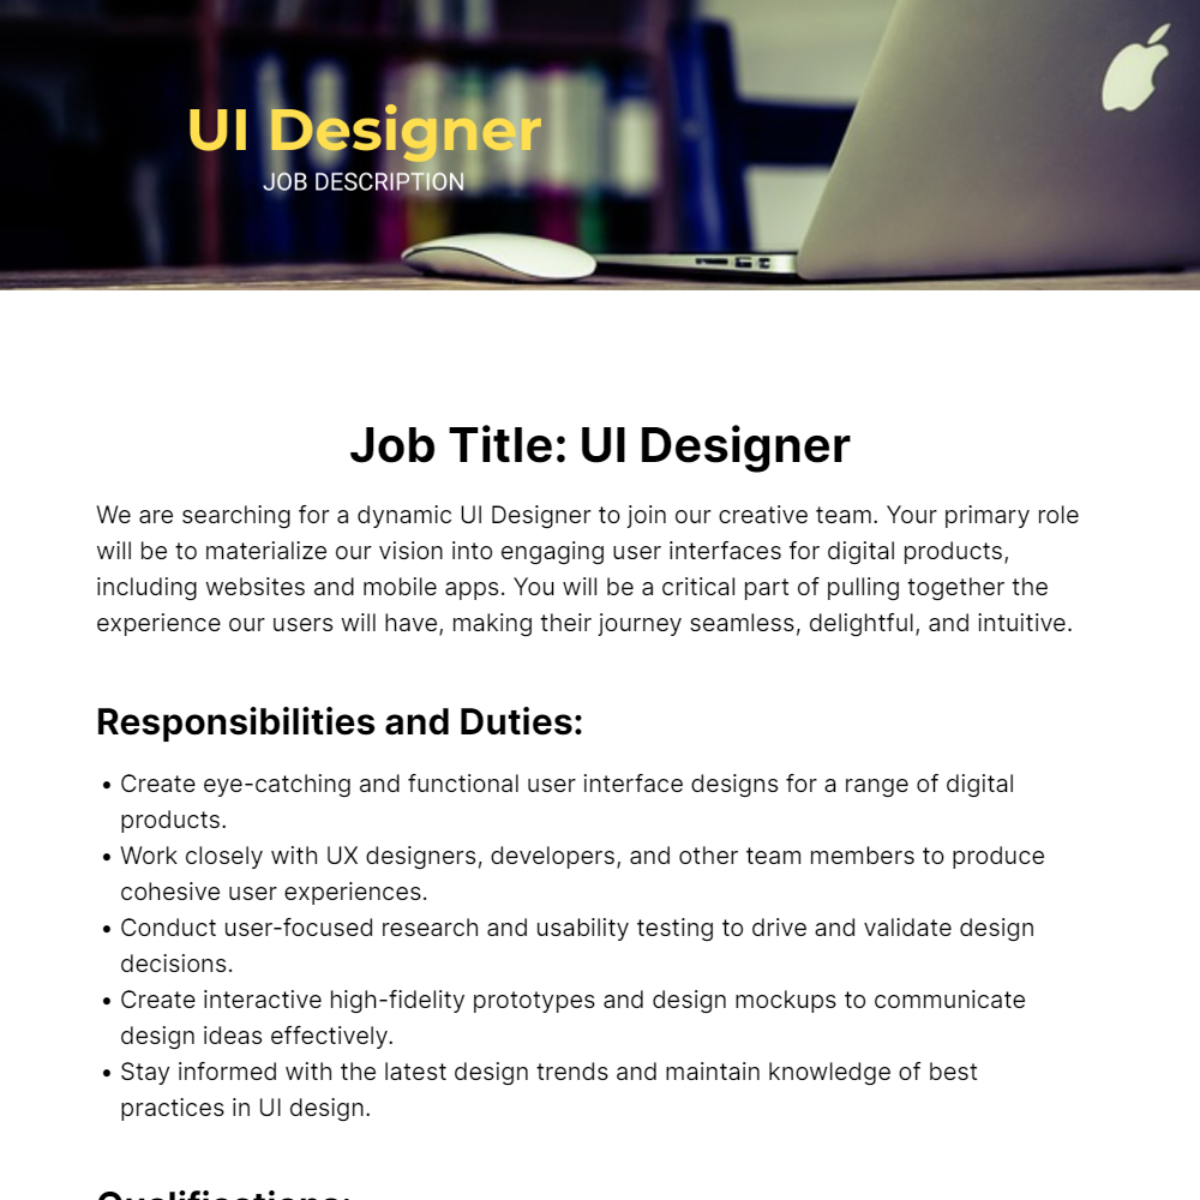 UI Designer Job Description Template